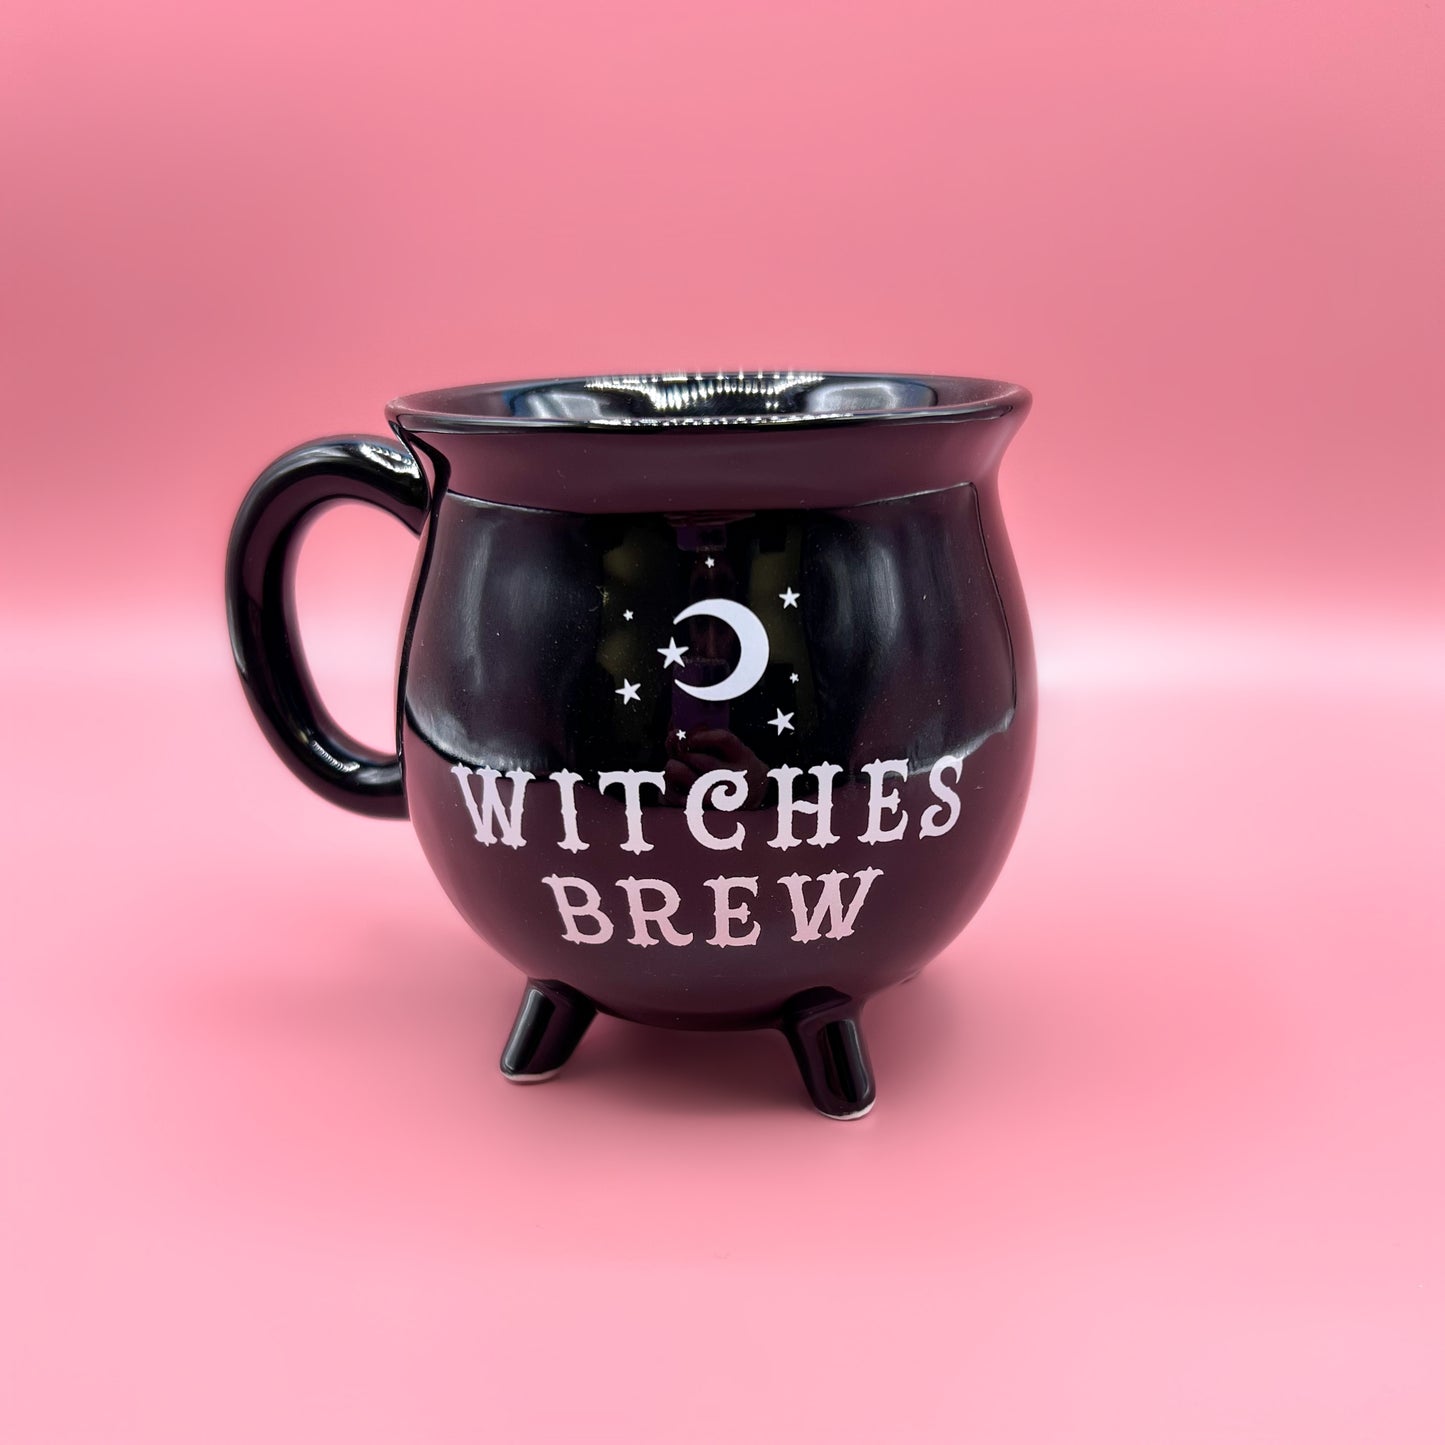 Witches Brew cauldron mug